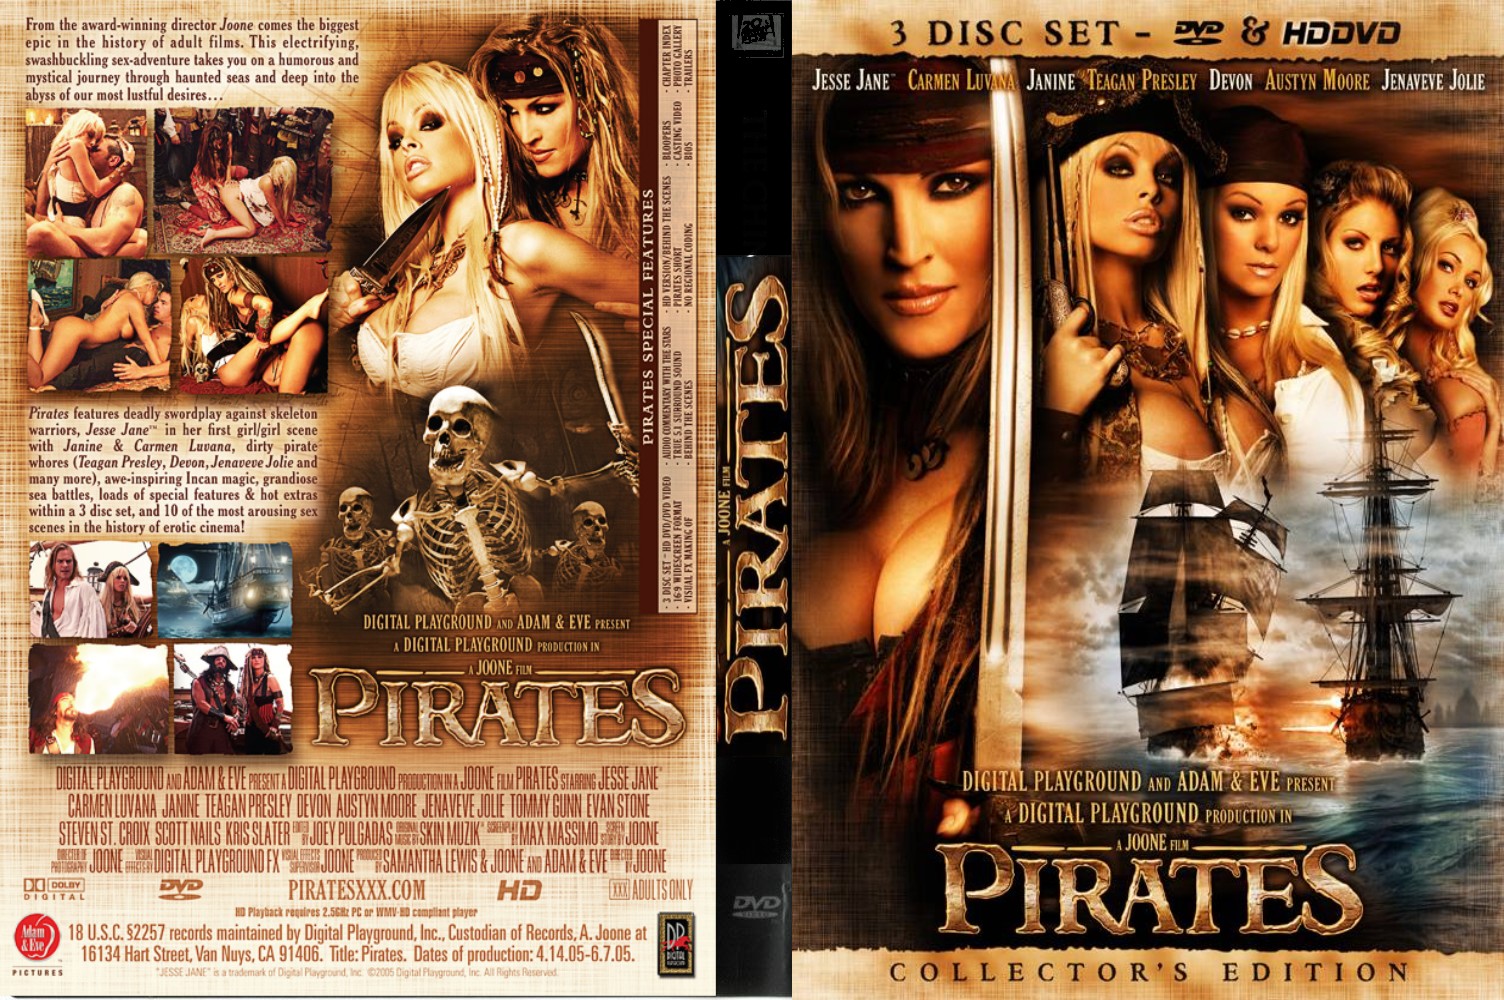 Pirates 2 porn movie cast